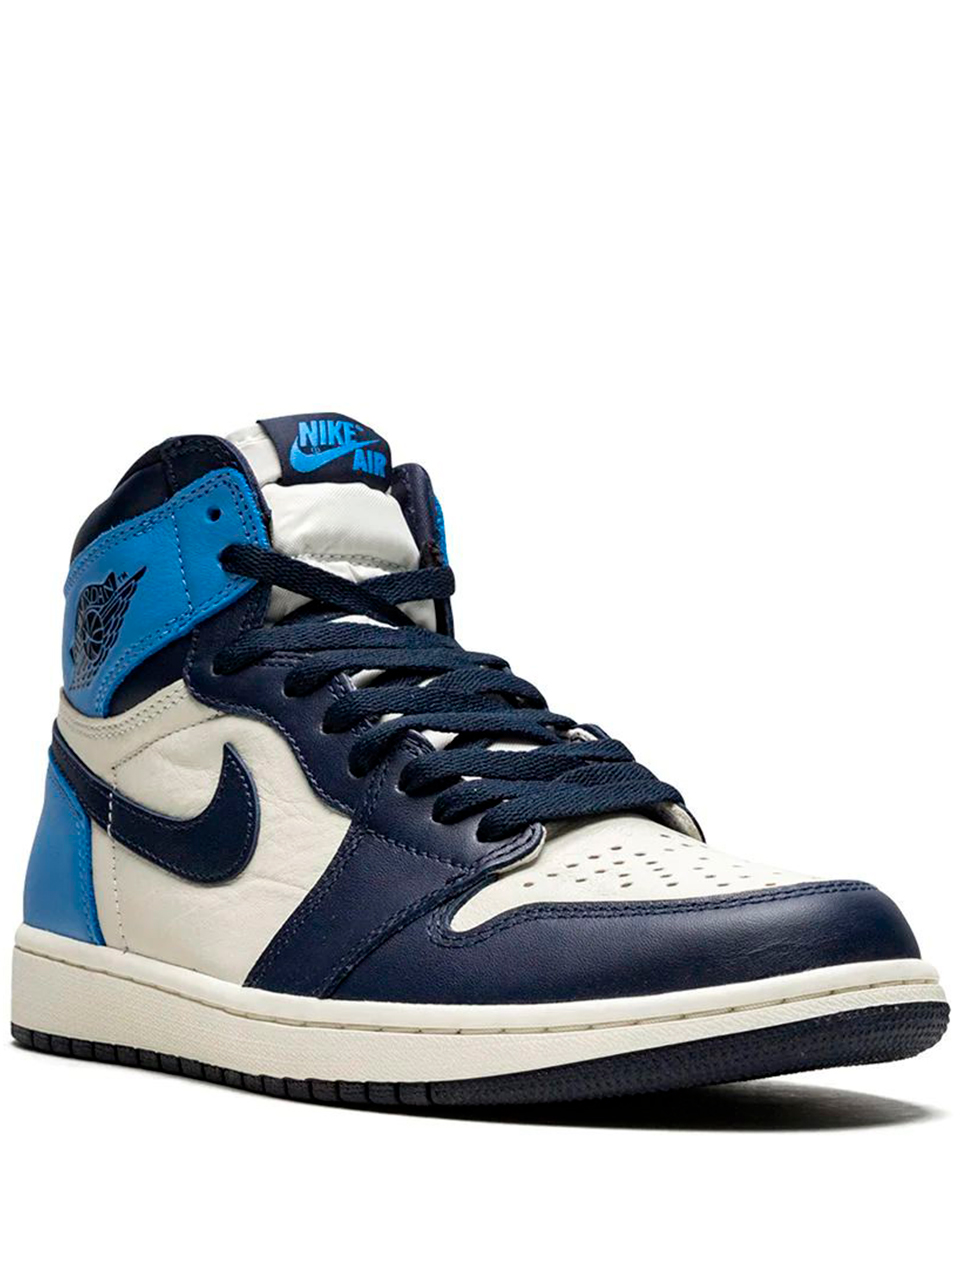 Imagem de: Tênis Nike Air Jordan 1 High OG Azul